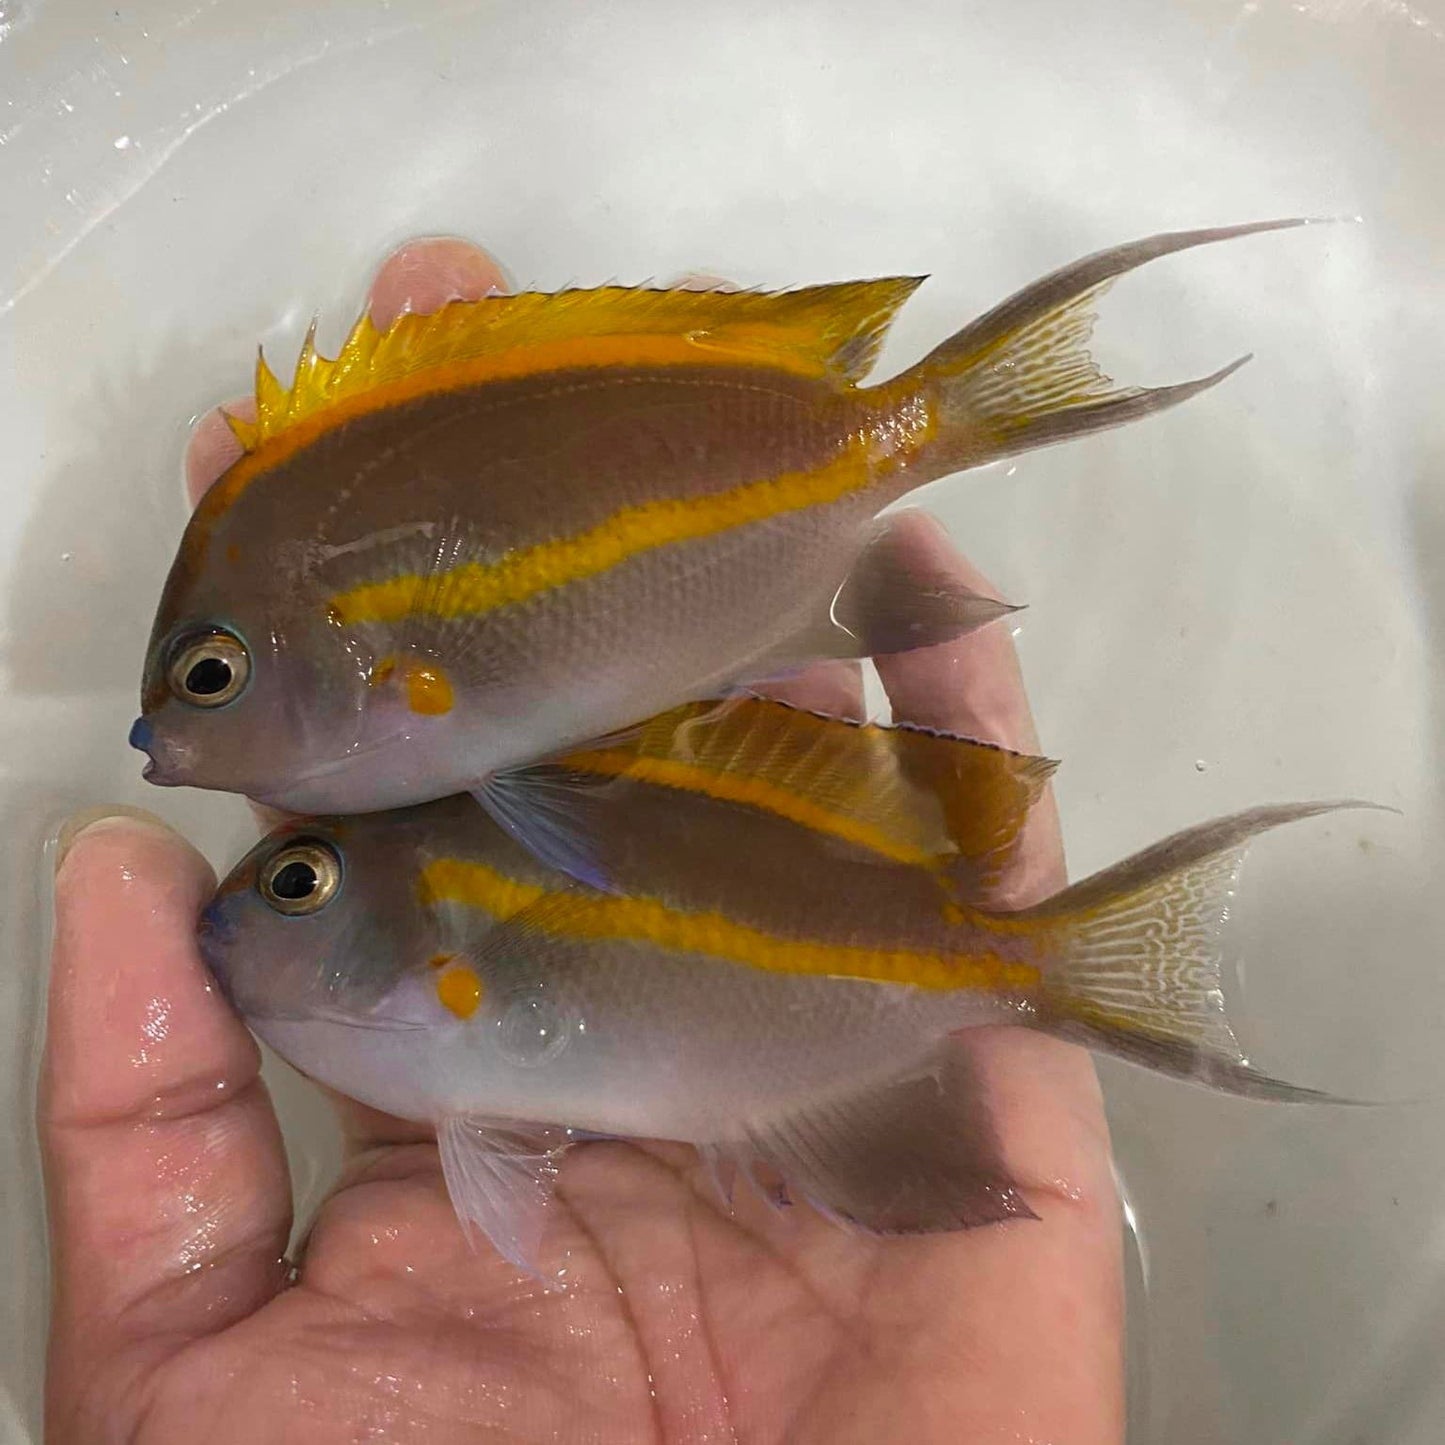 2" to 3" Bellus Angelfish - fishbuff - Genicanthus bellus